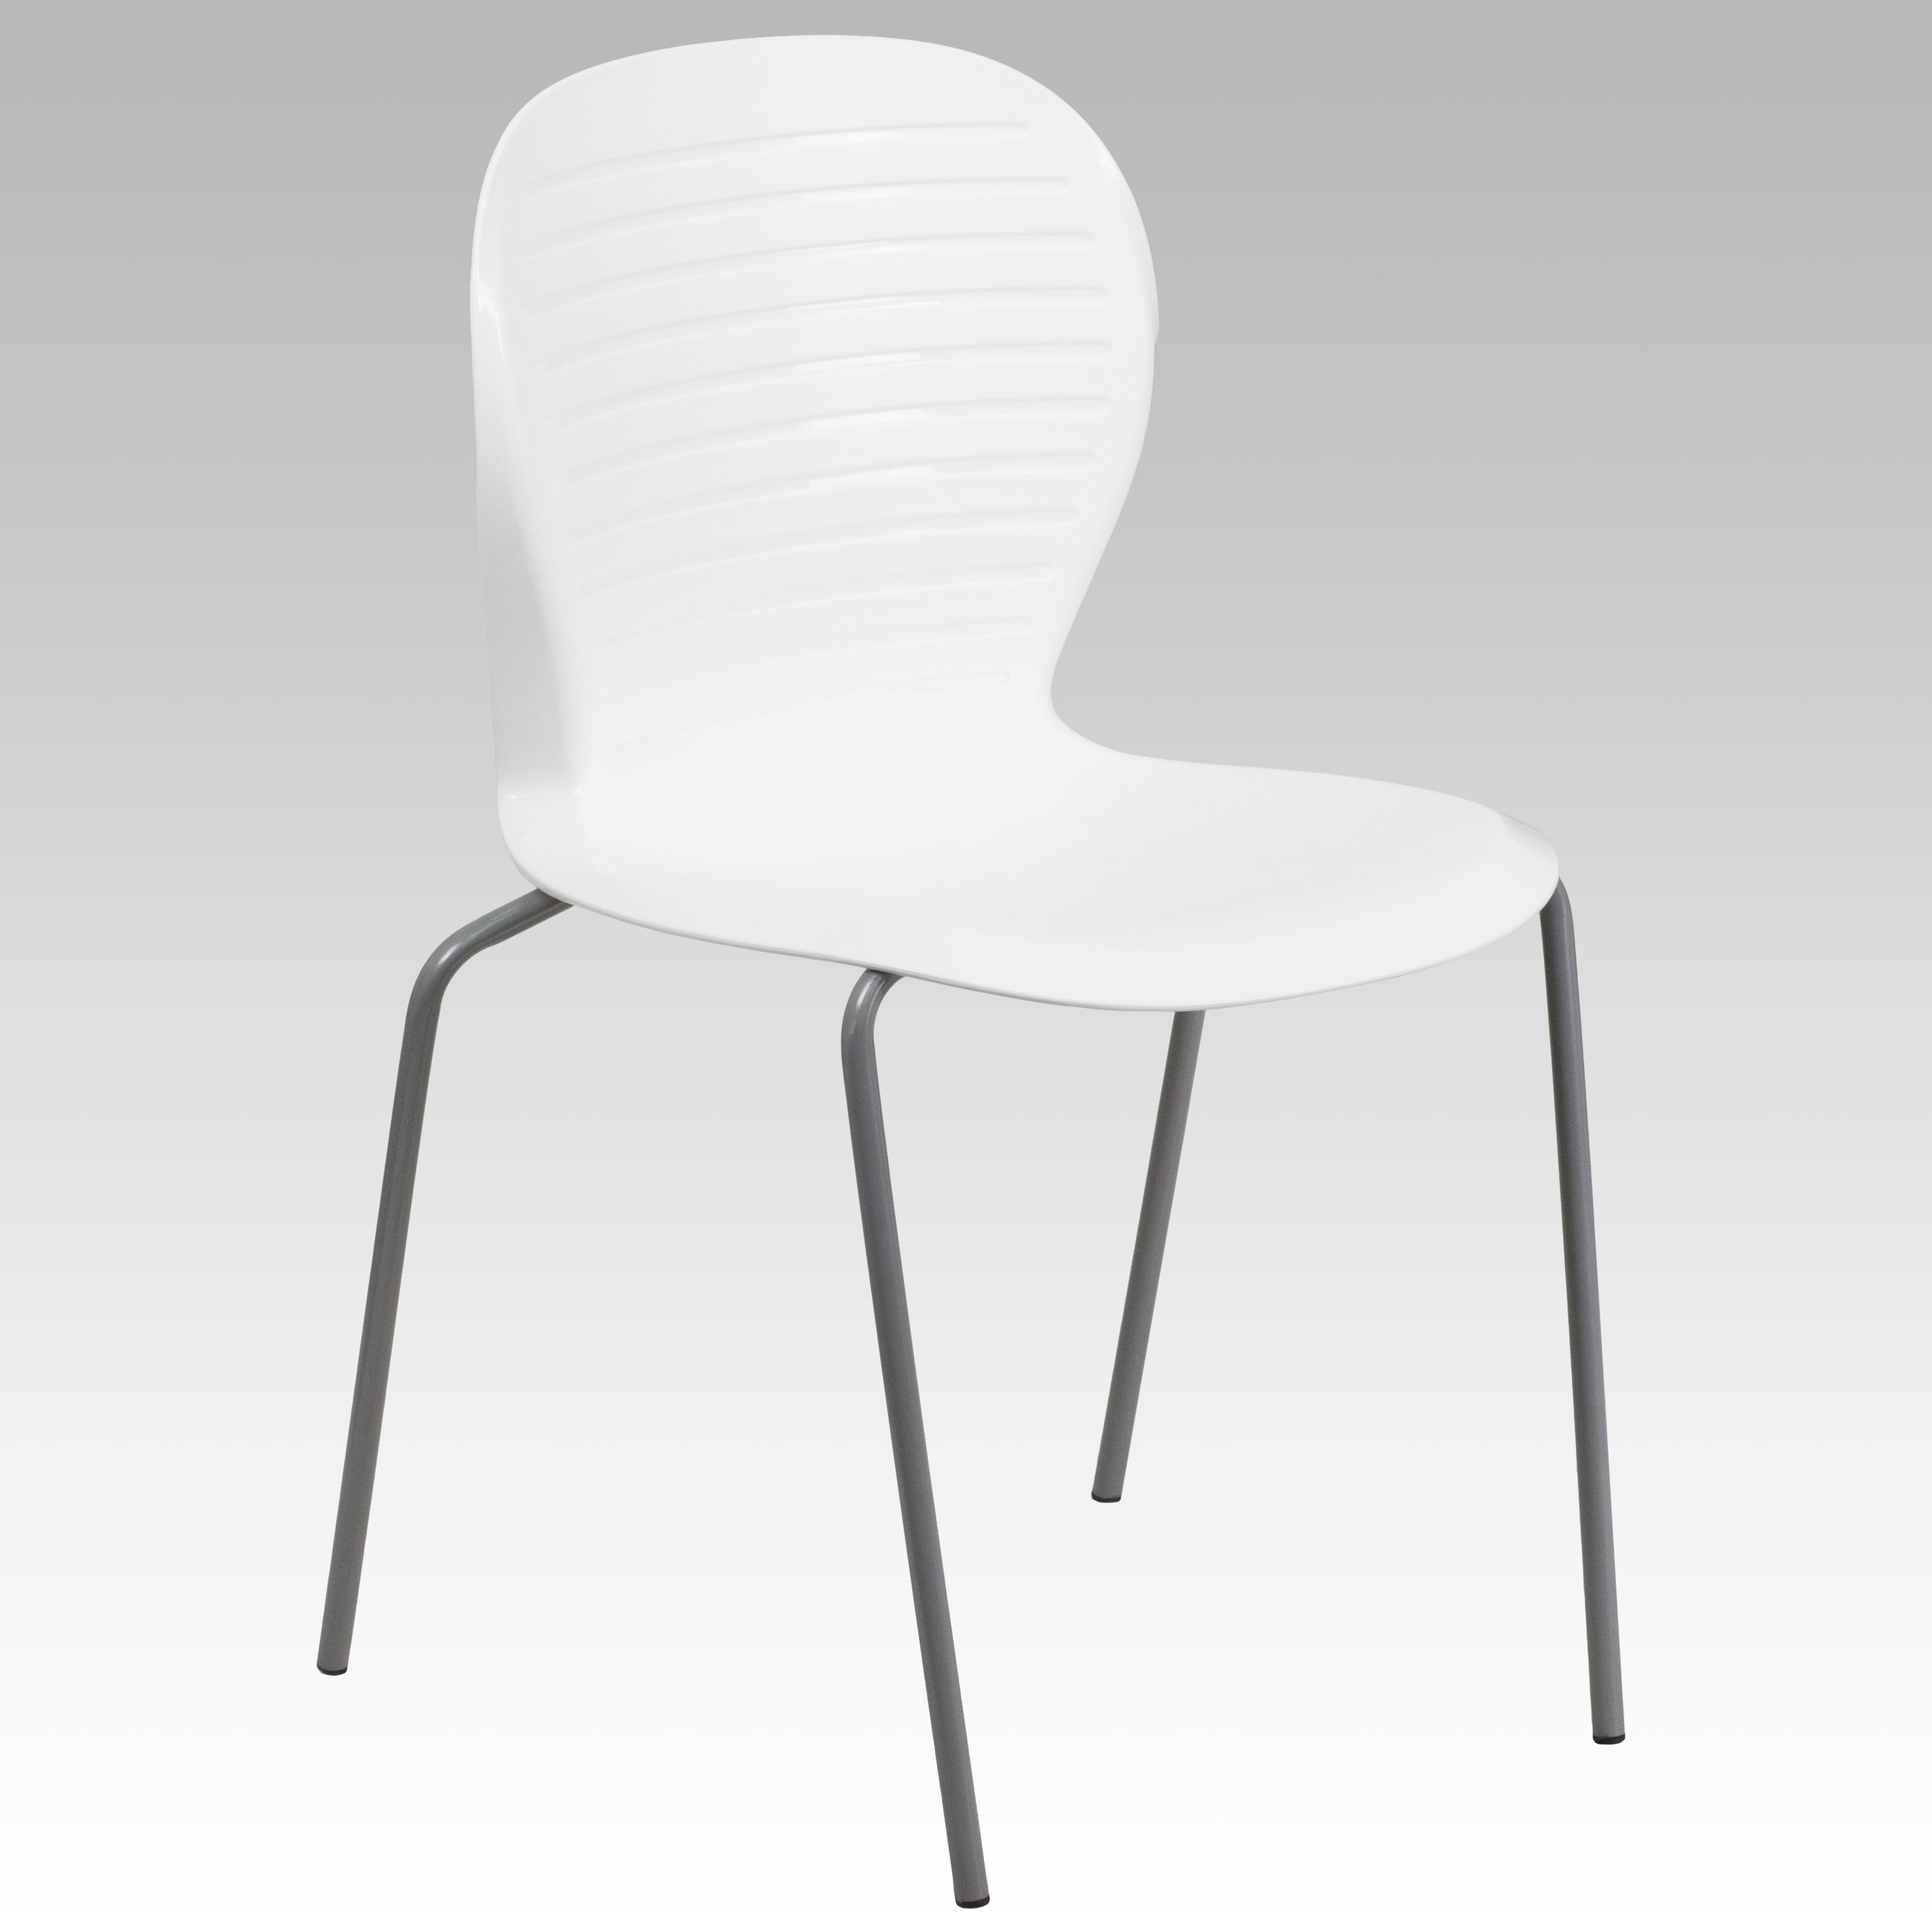 HERCULES Series 551 lb. Capacity Stack Chair-Plastic Stack Chair-Flash Furniture-Wall2Wall Furnishings